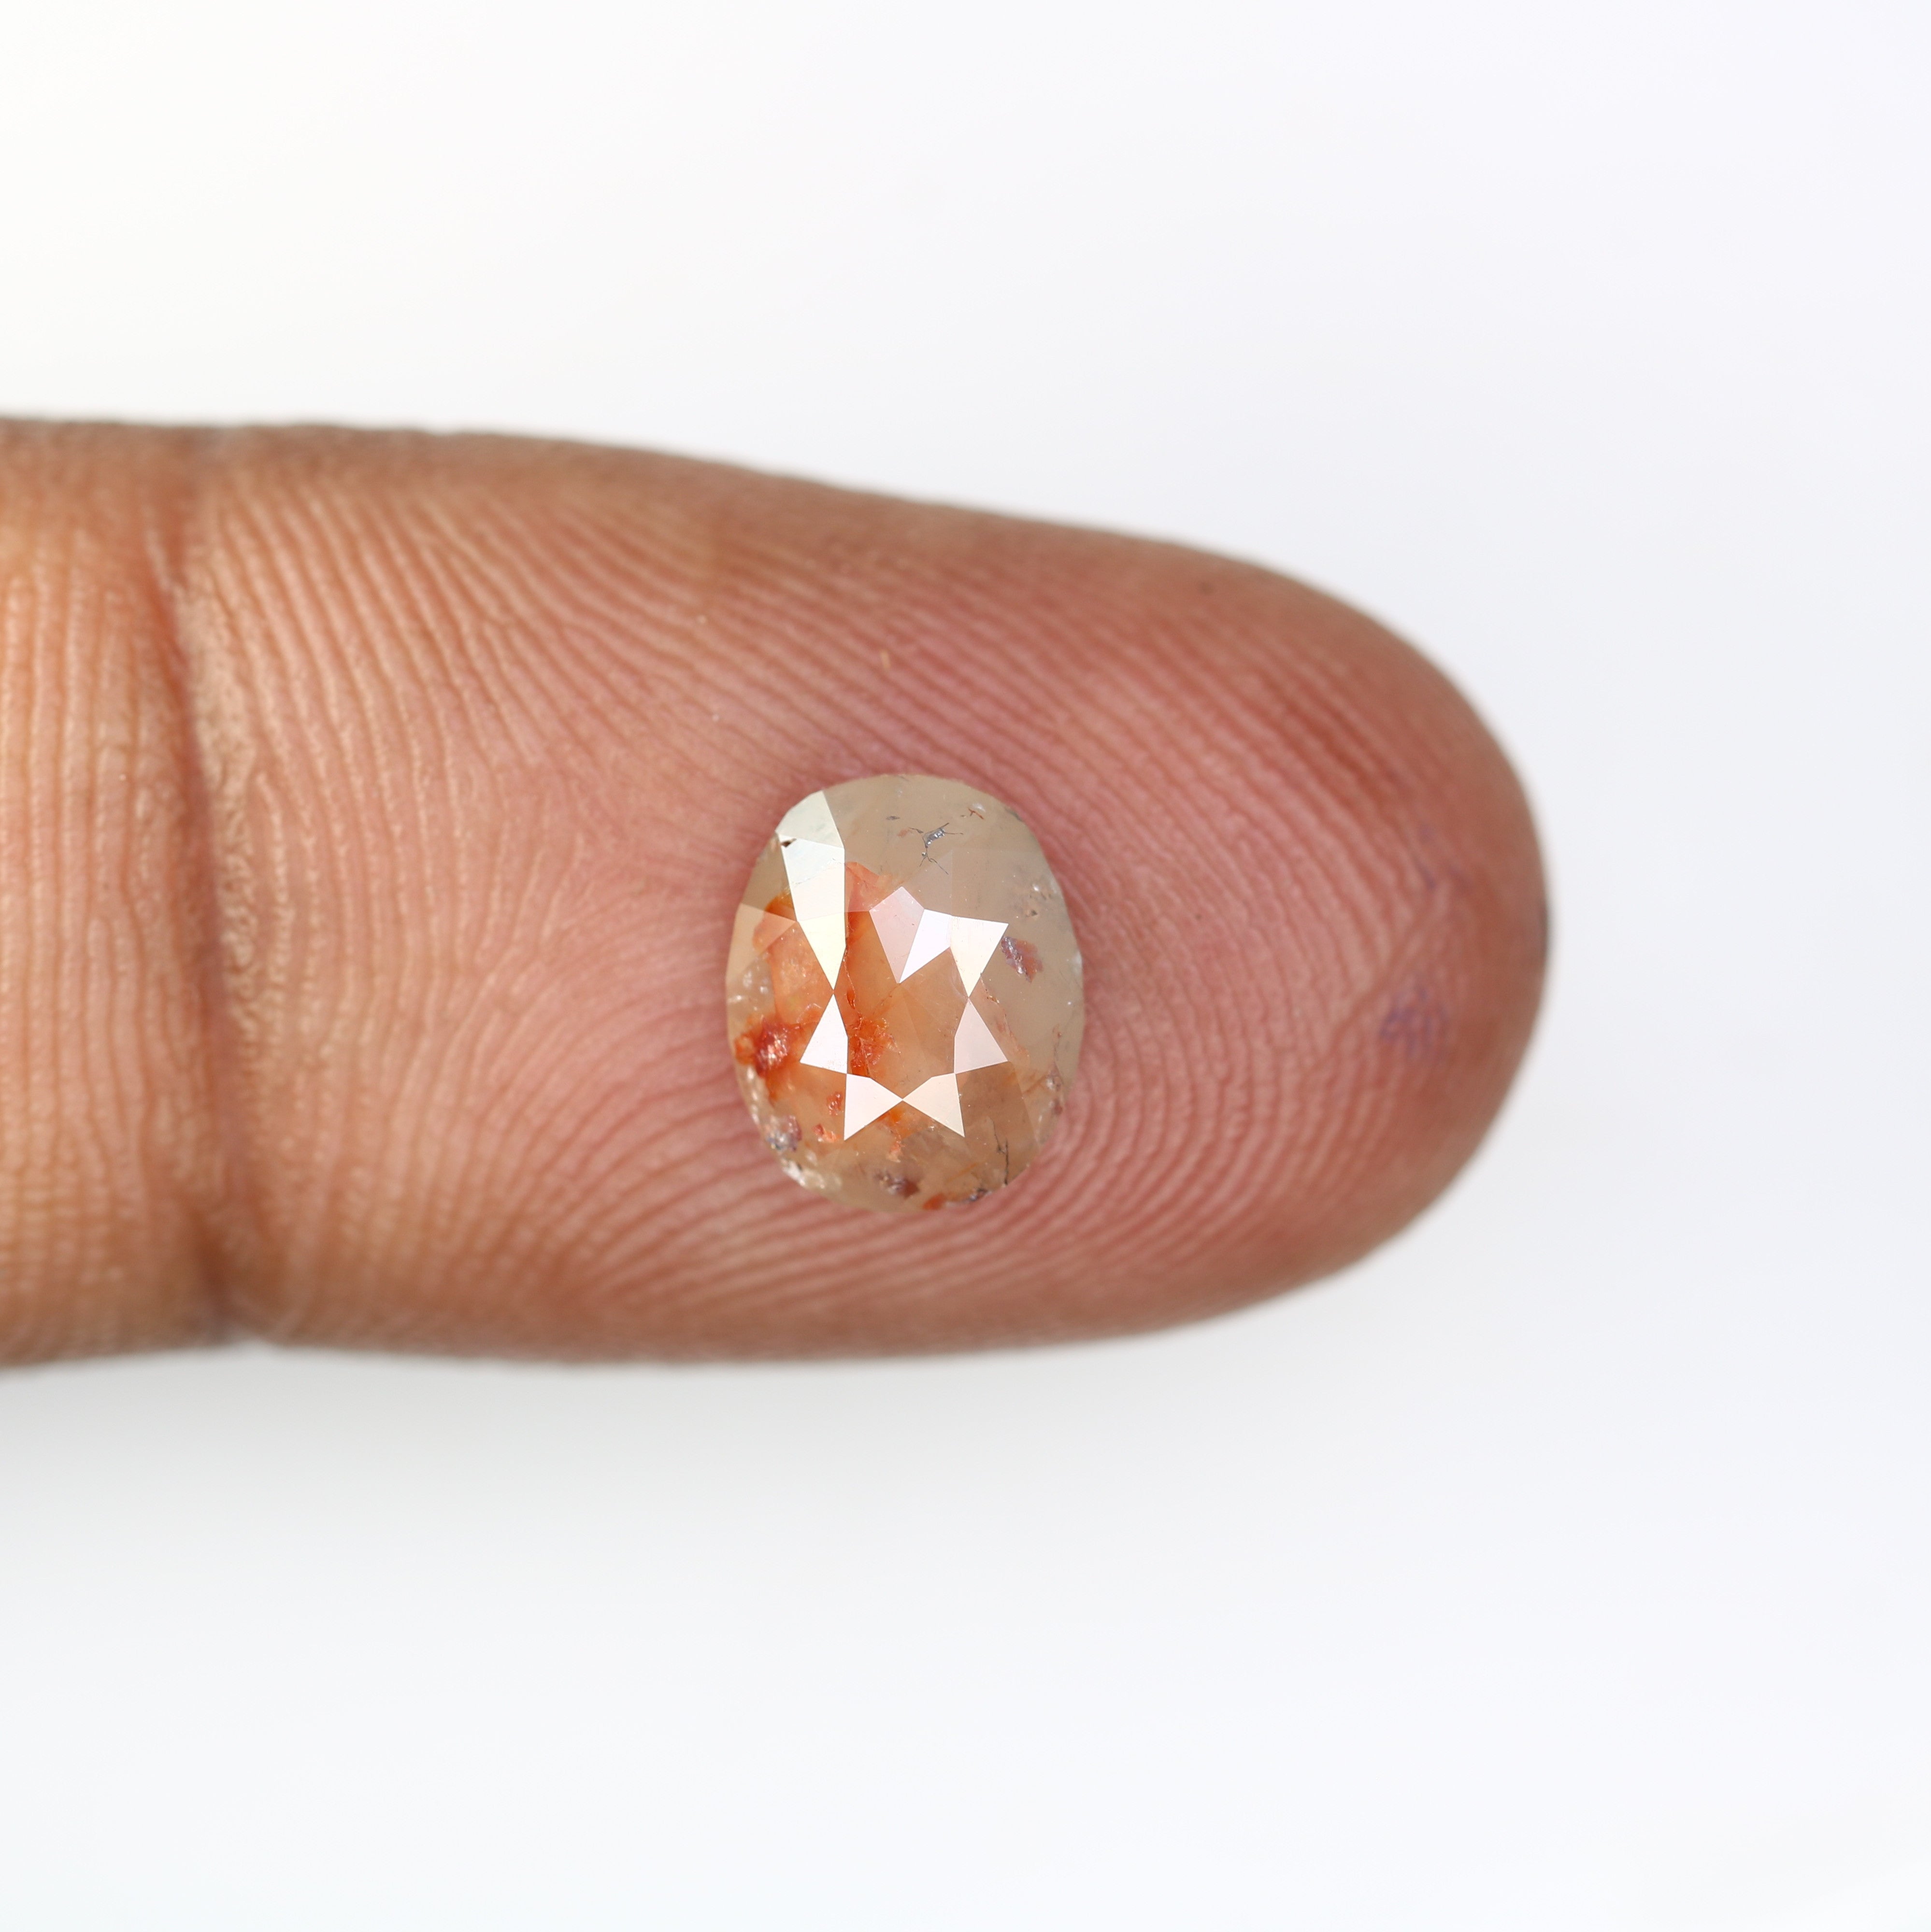 1.48 Carat Oval Shaped Diamond Ring Natural Loose Fancy Peach Color Diamond